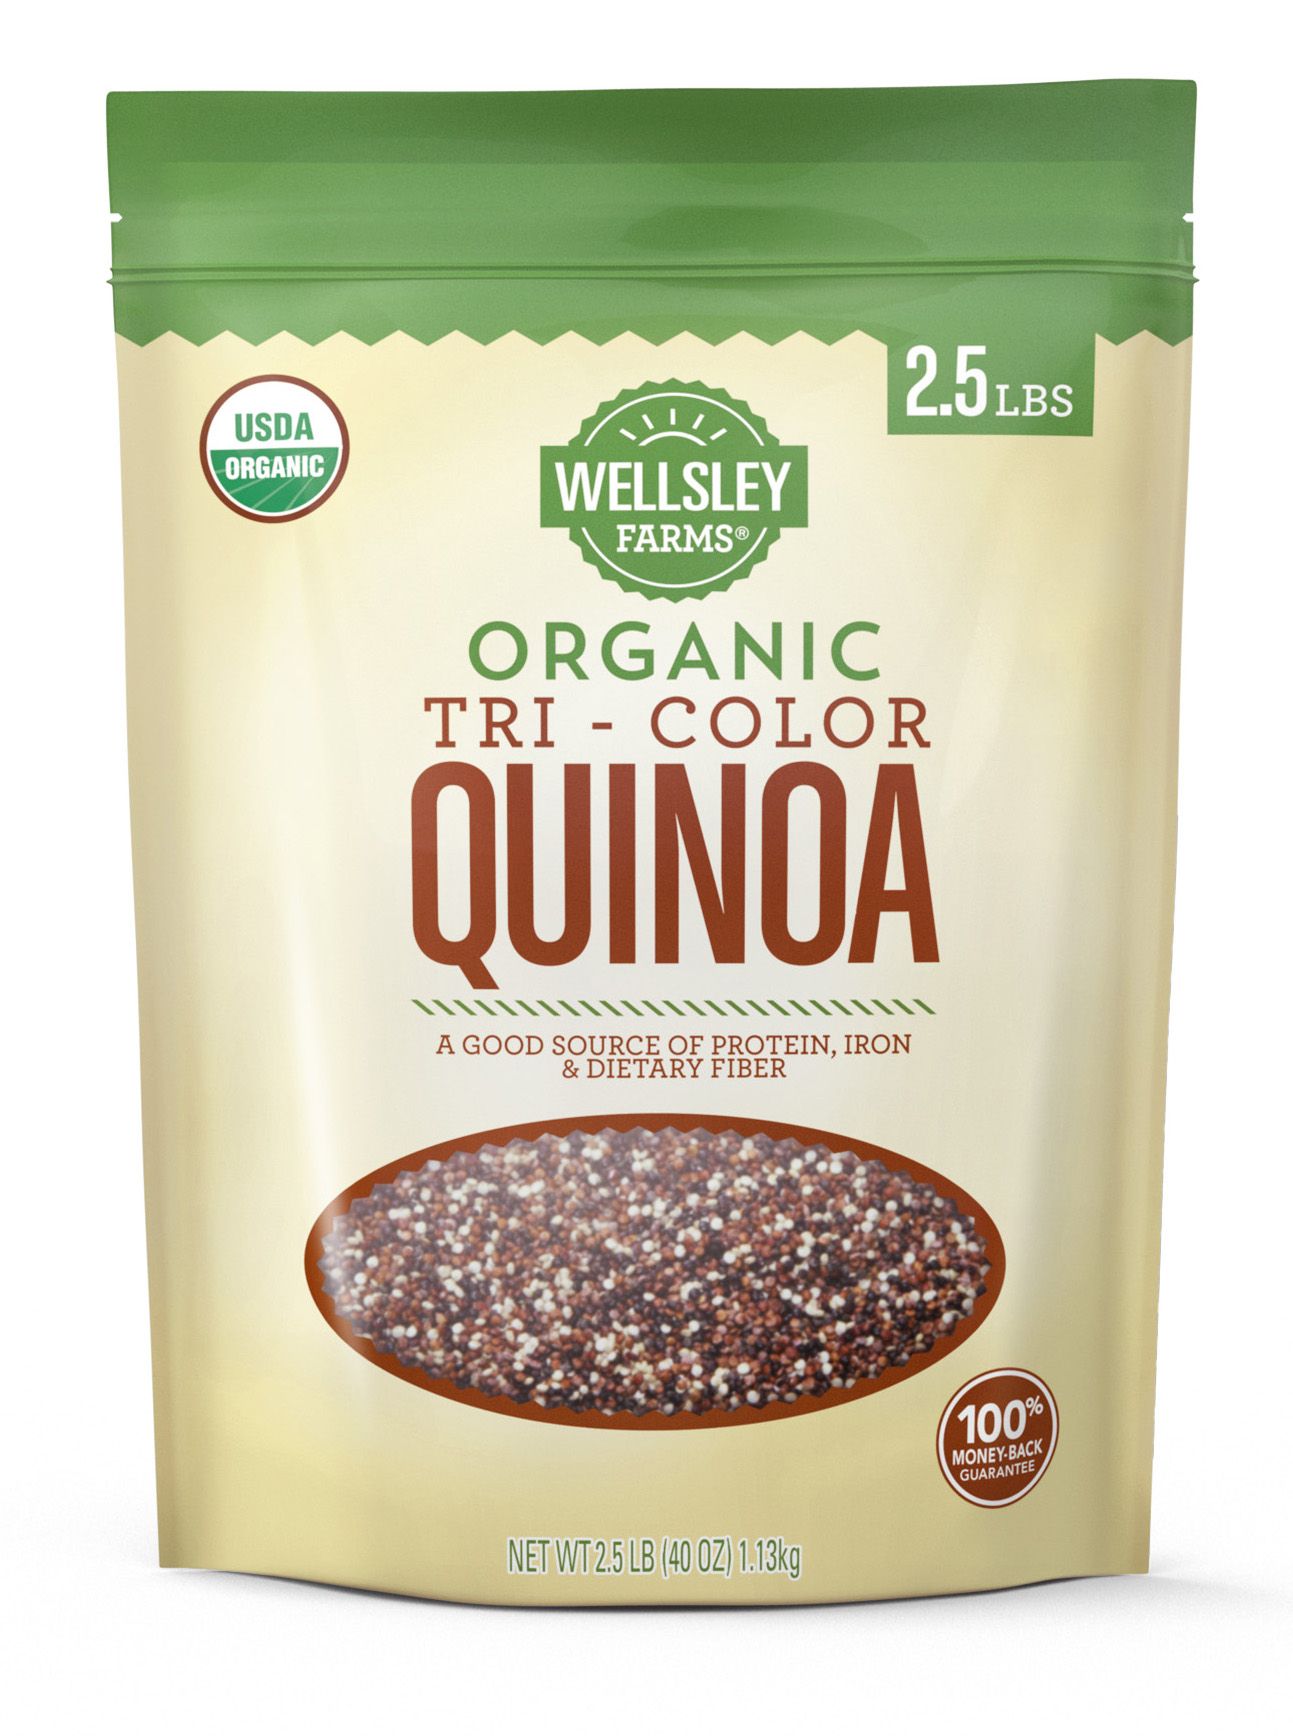 Wellsley Farms Organic Tri-Color Quinoa, 2.5 lbs.